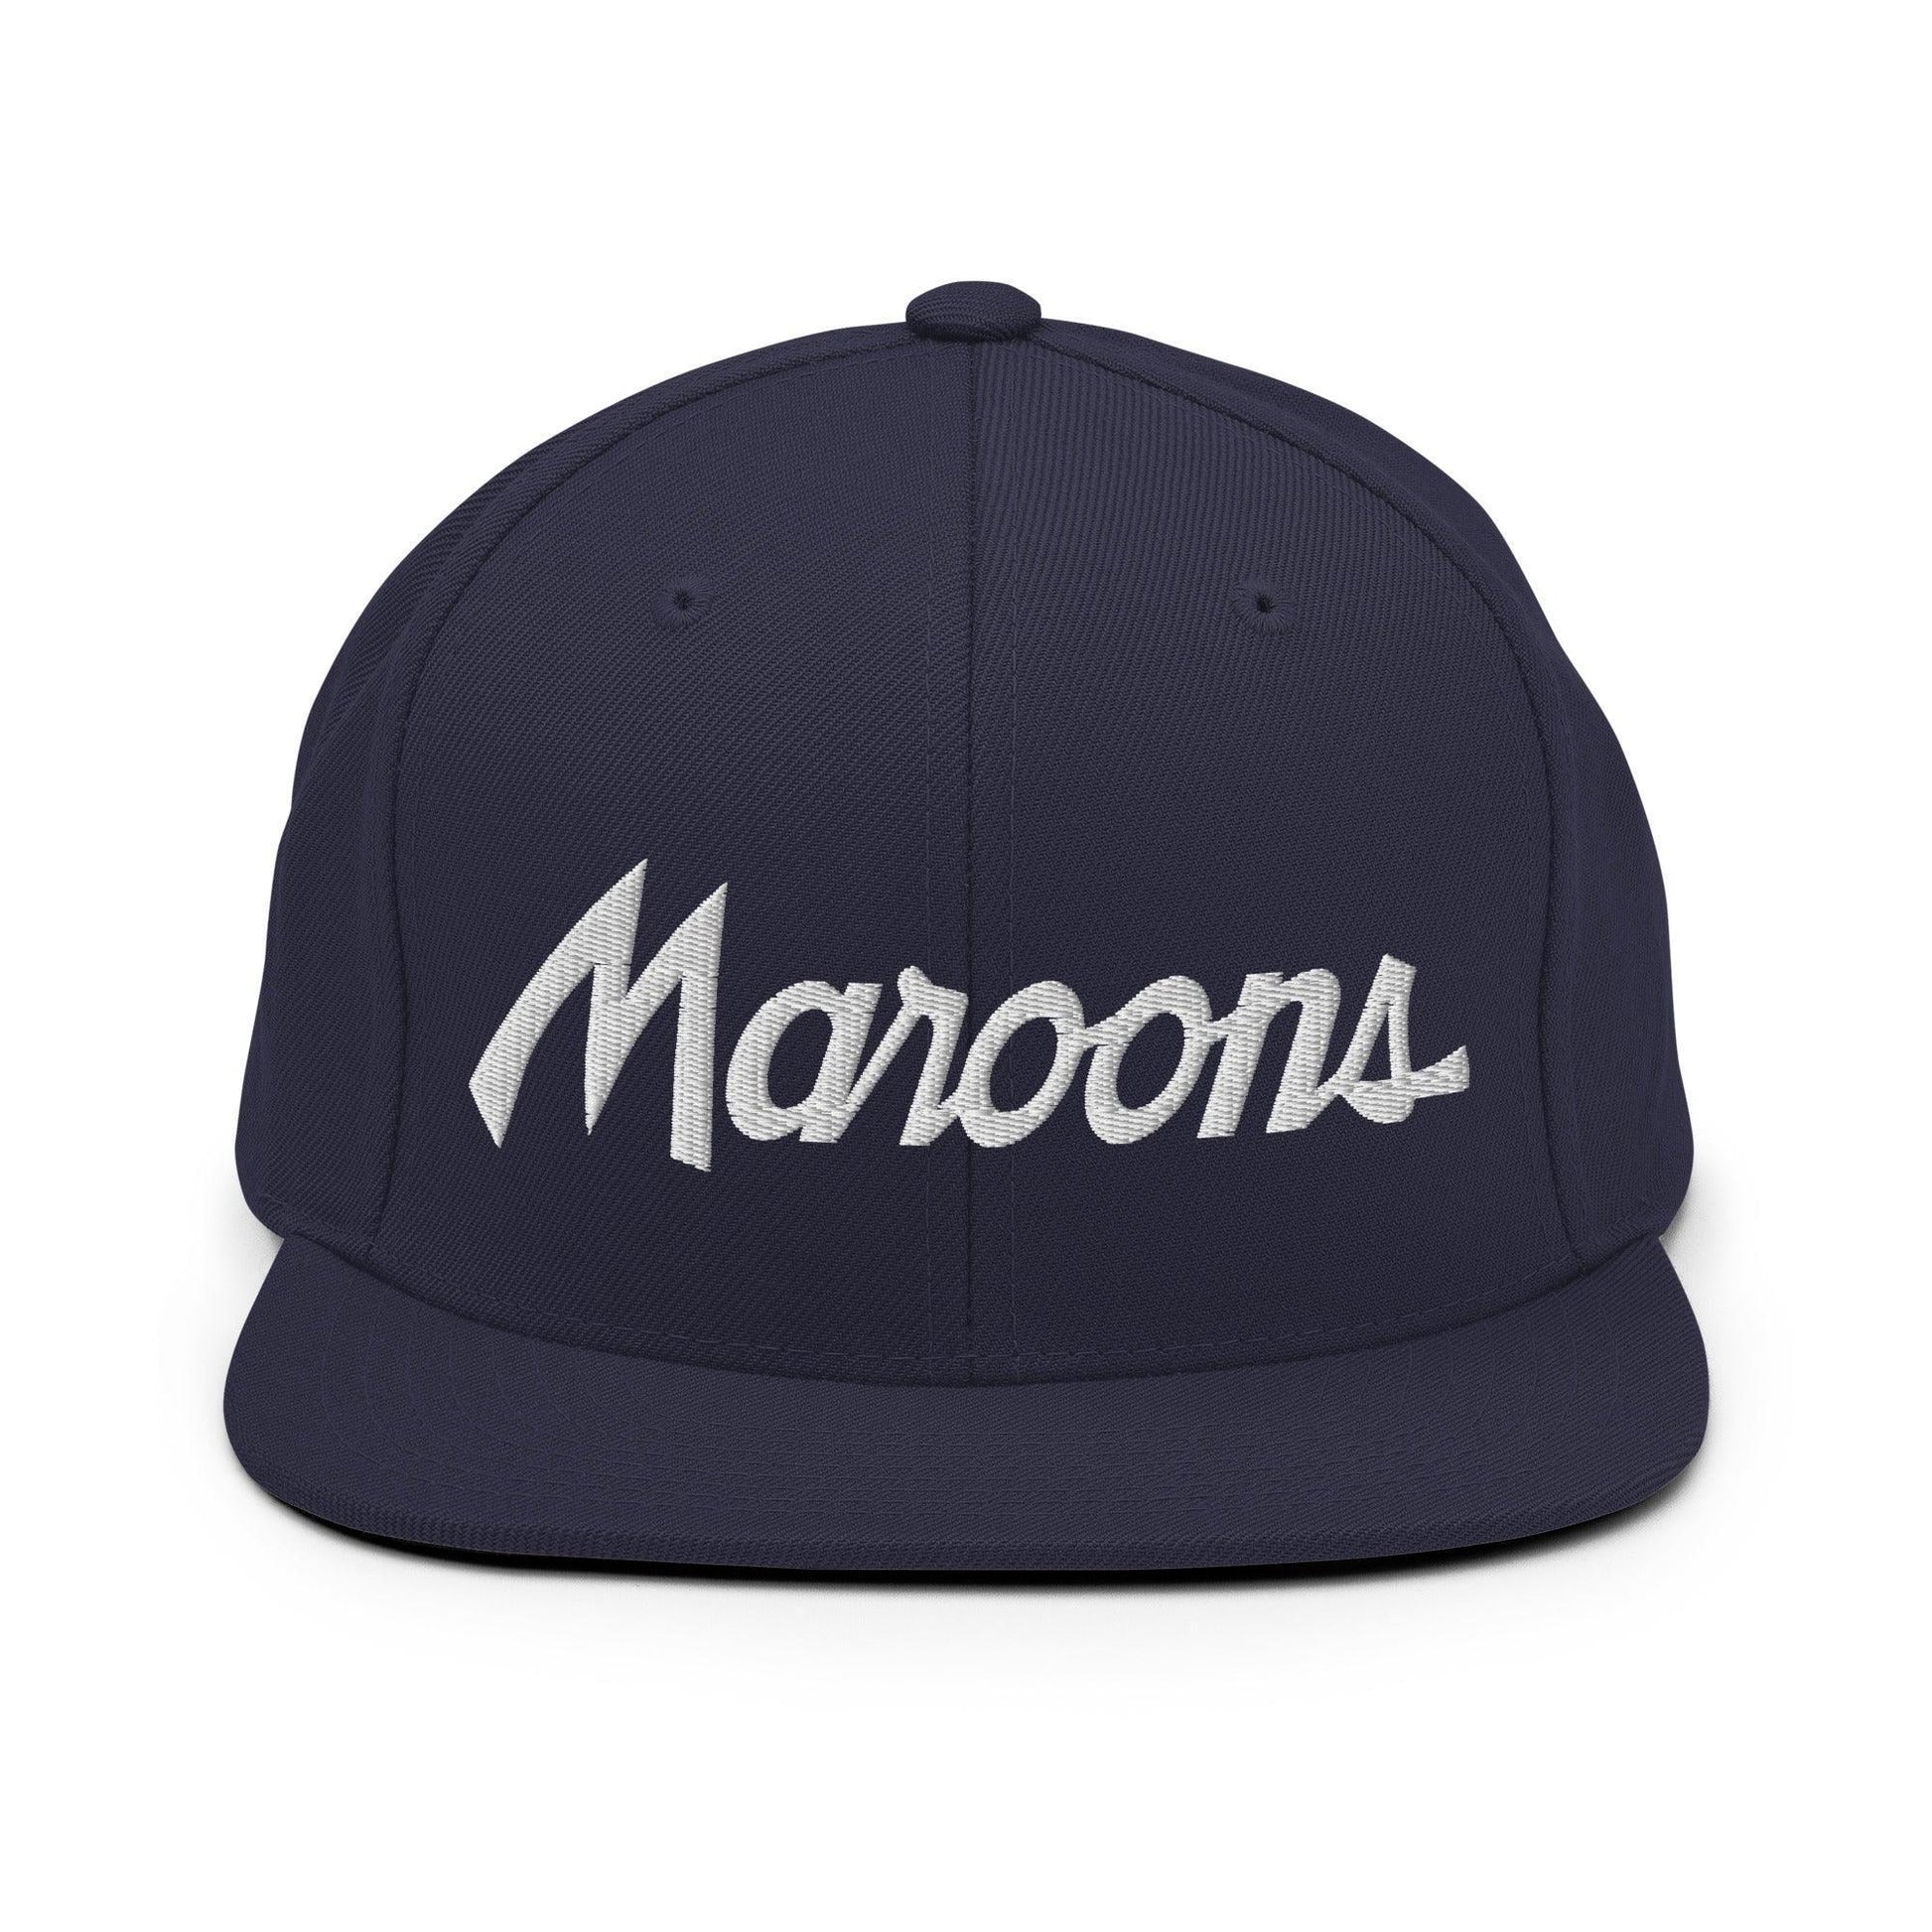 Maroons School Mascot Script Snapback Hat Navy